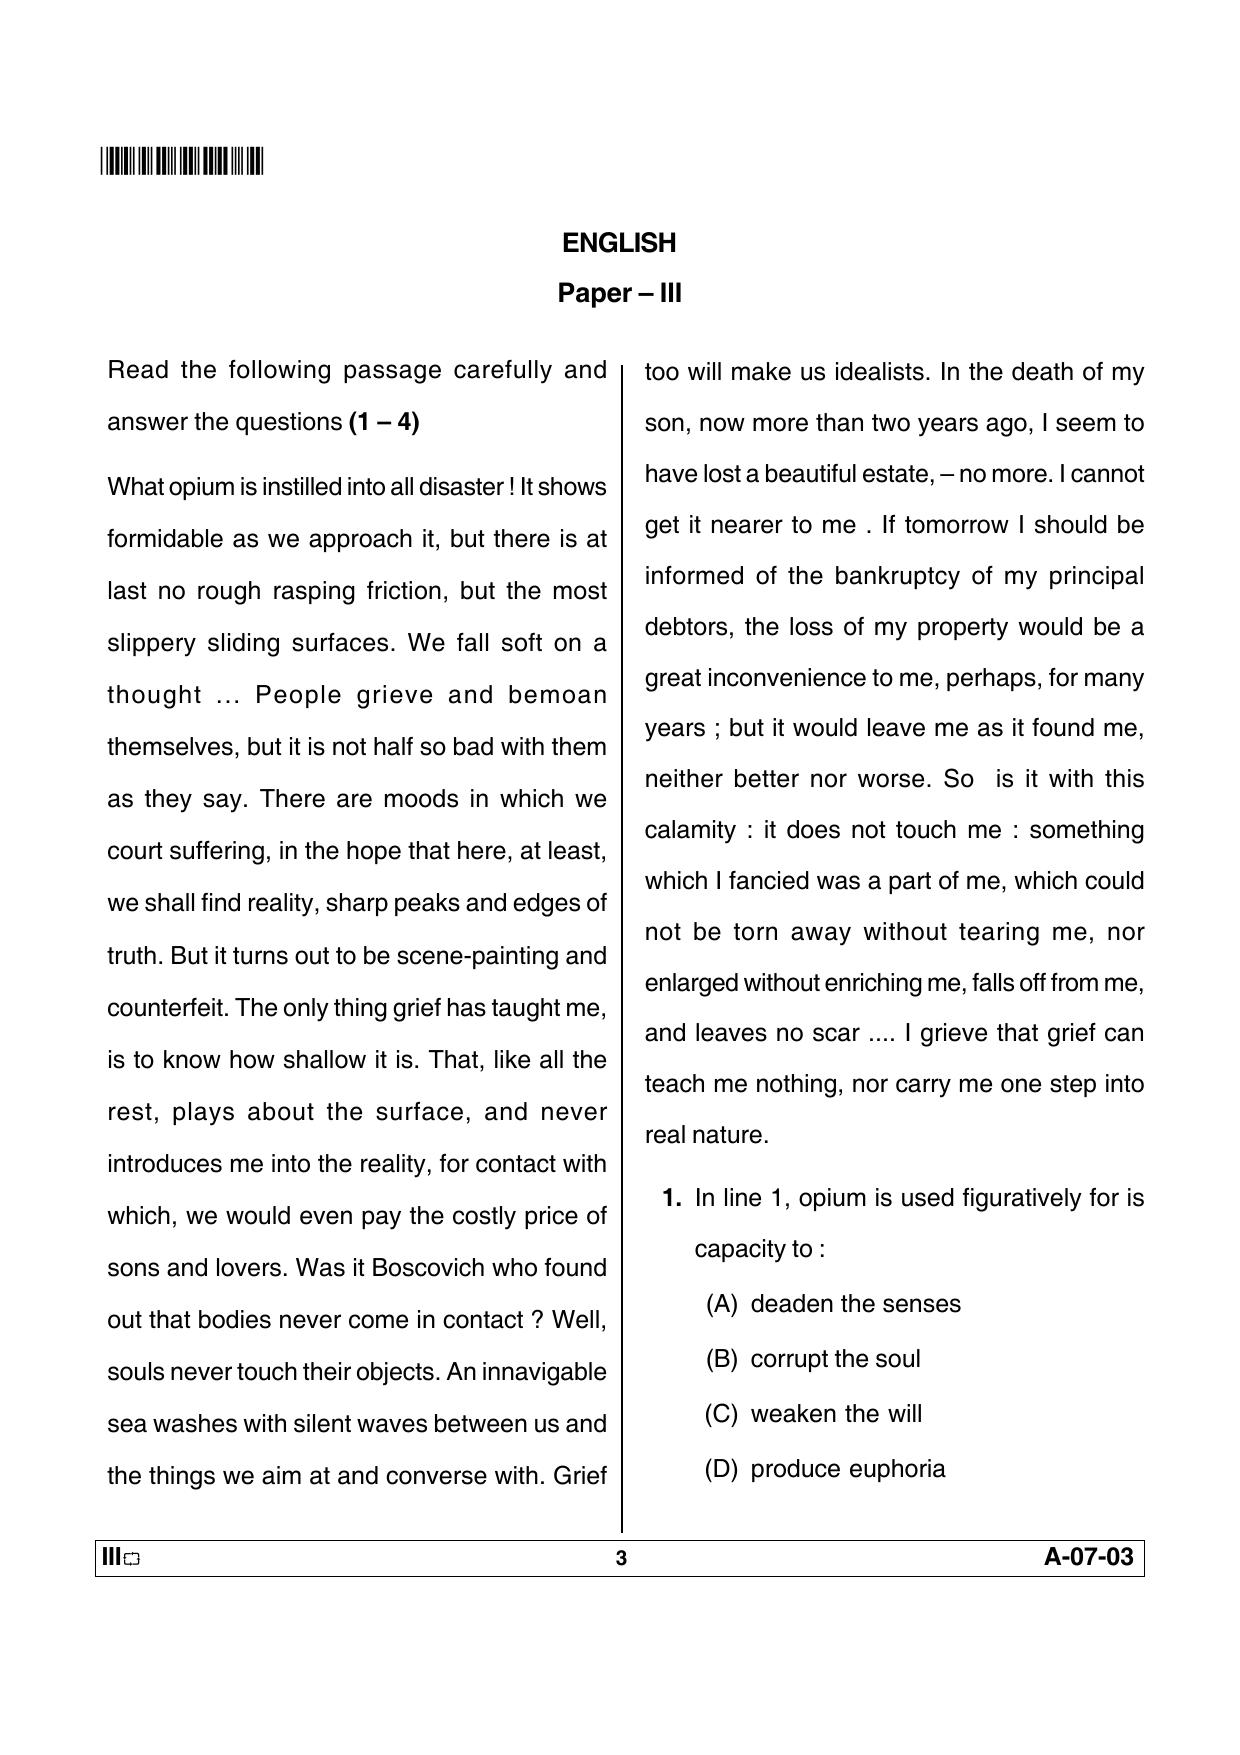 APSET English Previous Paper PDF - Page 3